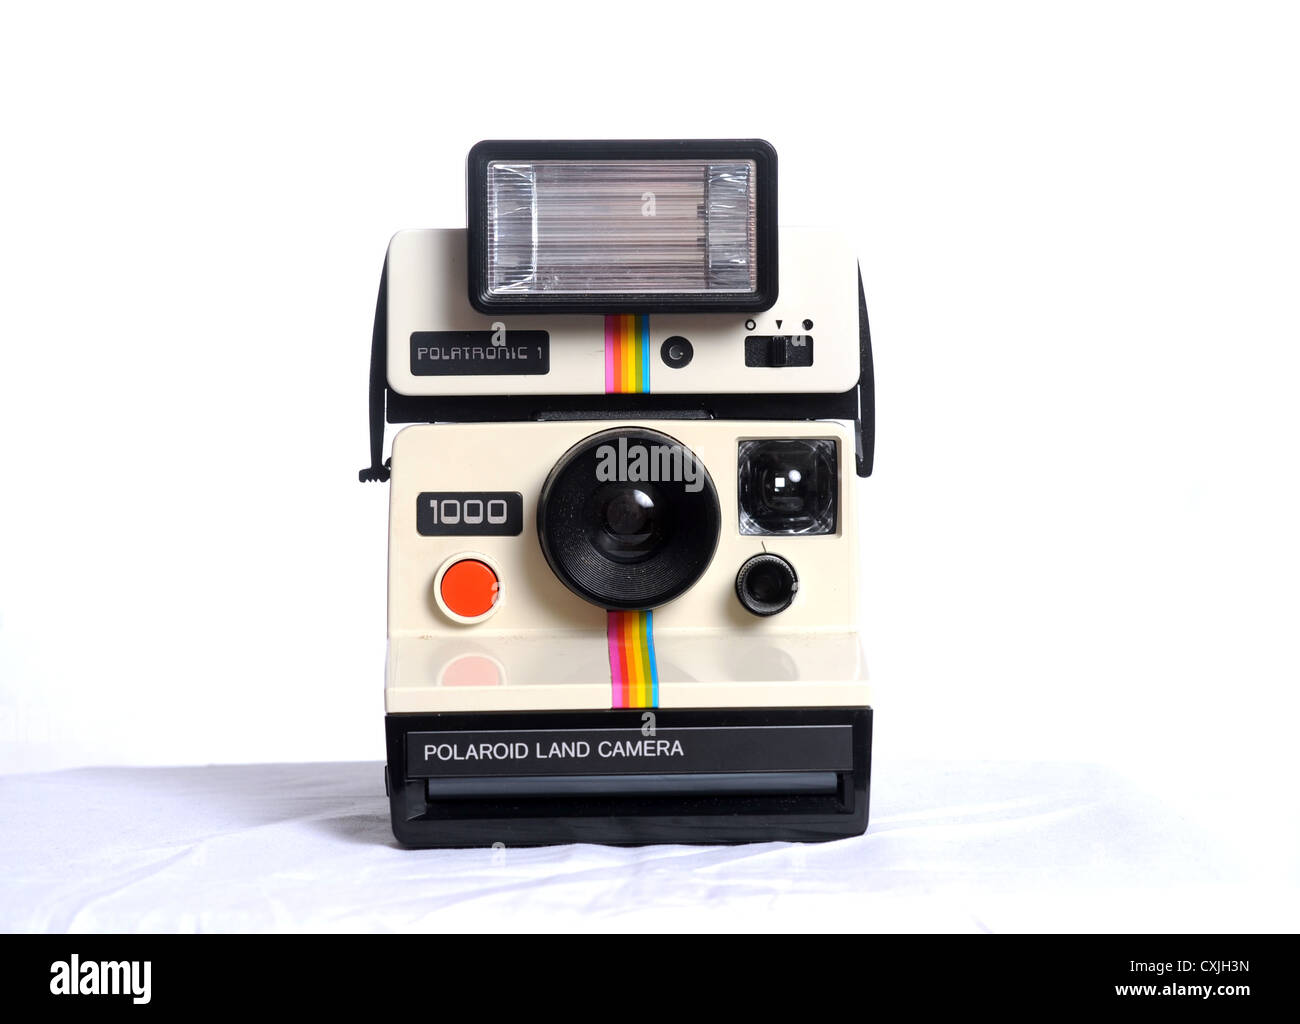 Vecchia Terra Polaroid fotocamera UK 1000 Foto stock - Alamy